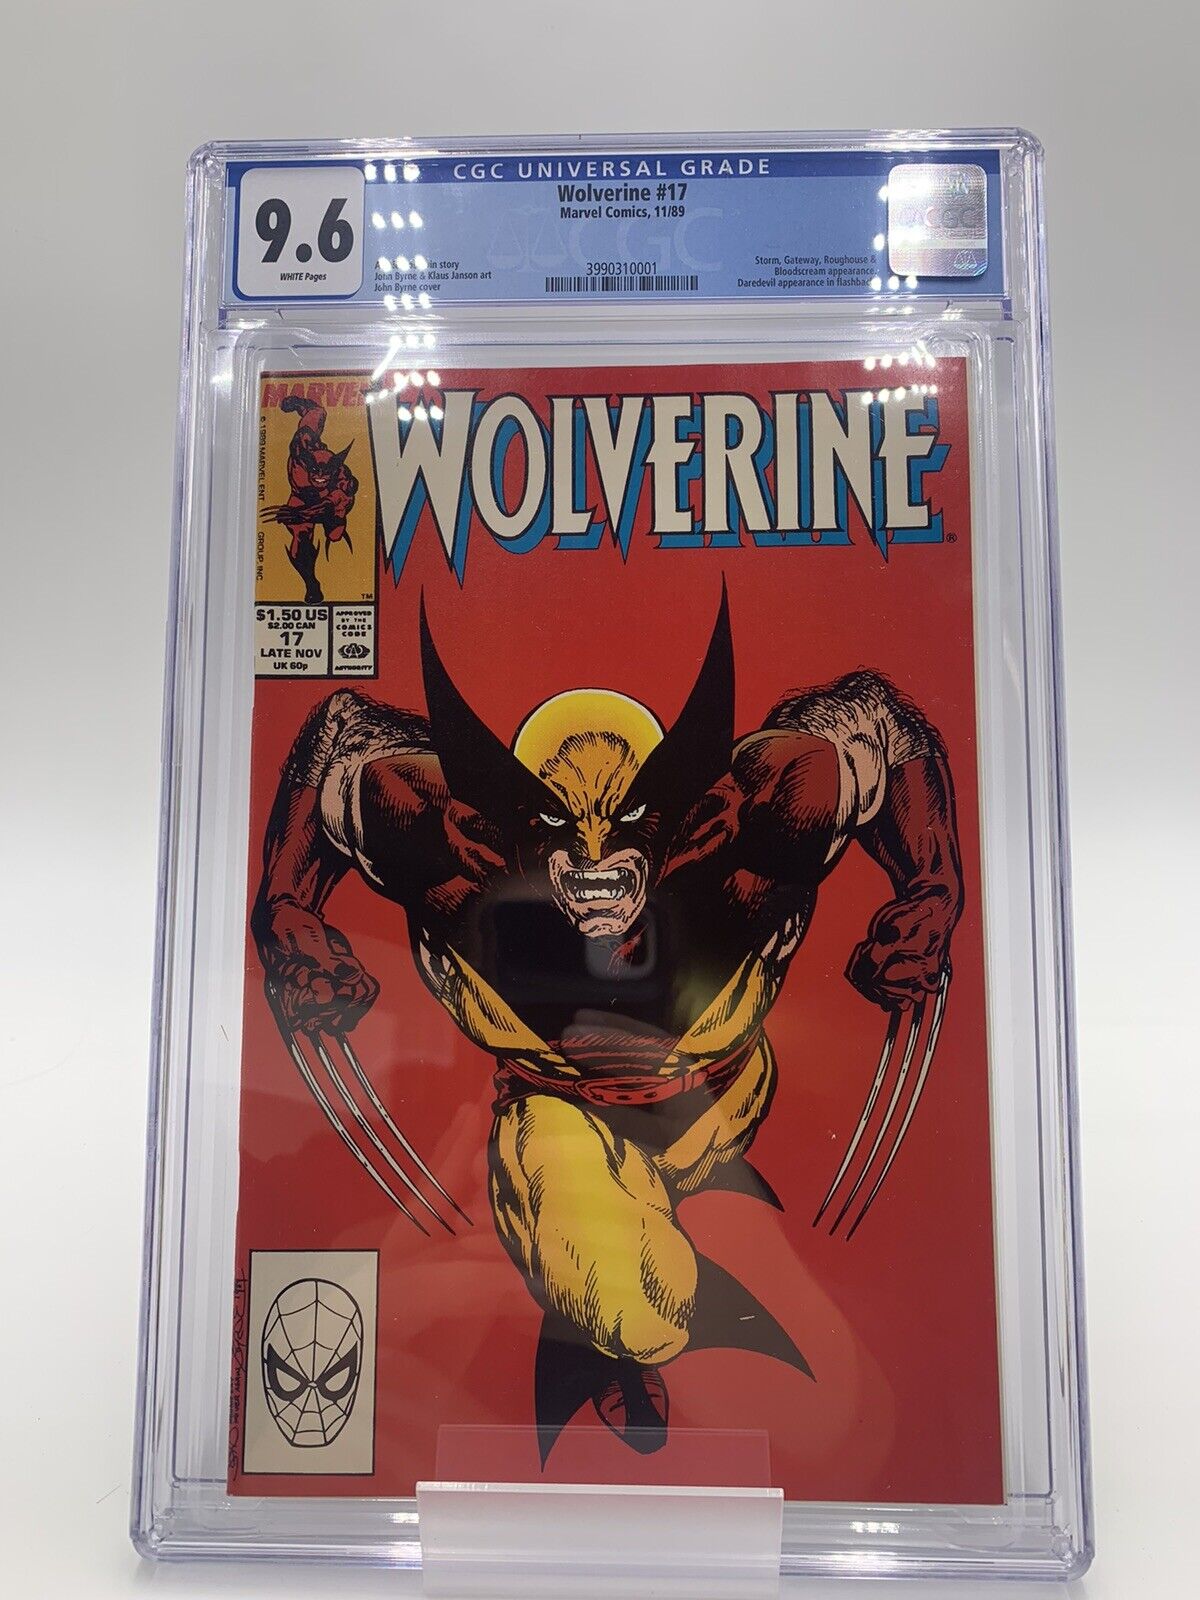 WOLVERINE #17 CGC 9.6 NM+ WP (Marvel Comics, 1989)  Classic JOHN BYRNE Cover